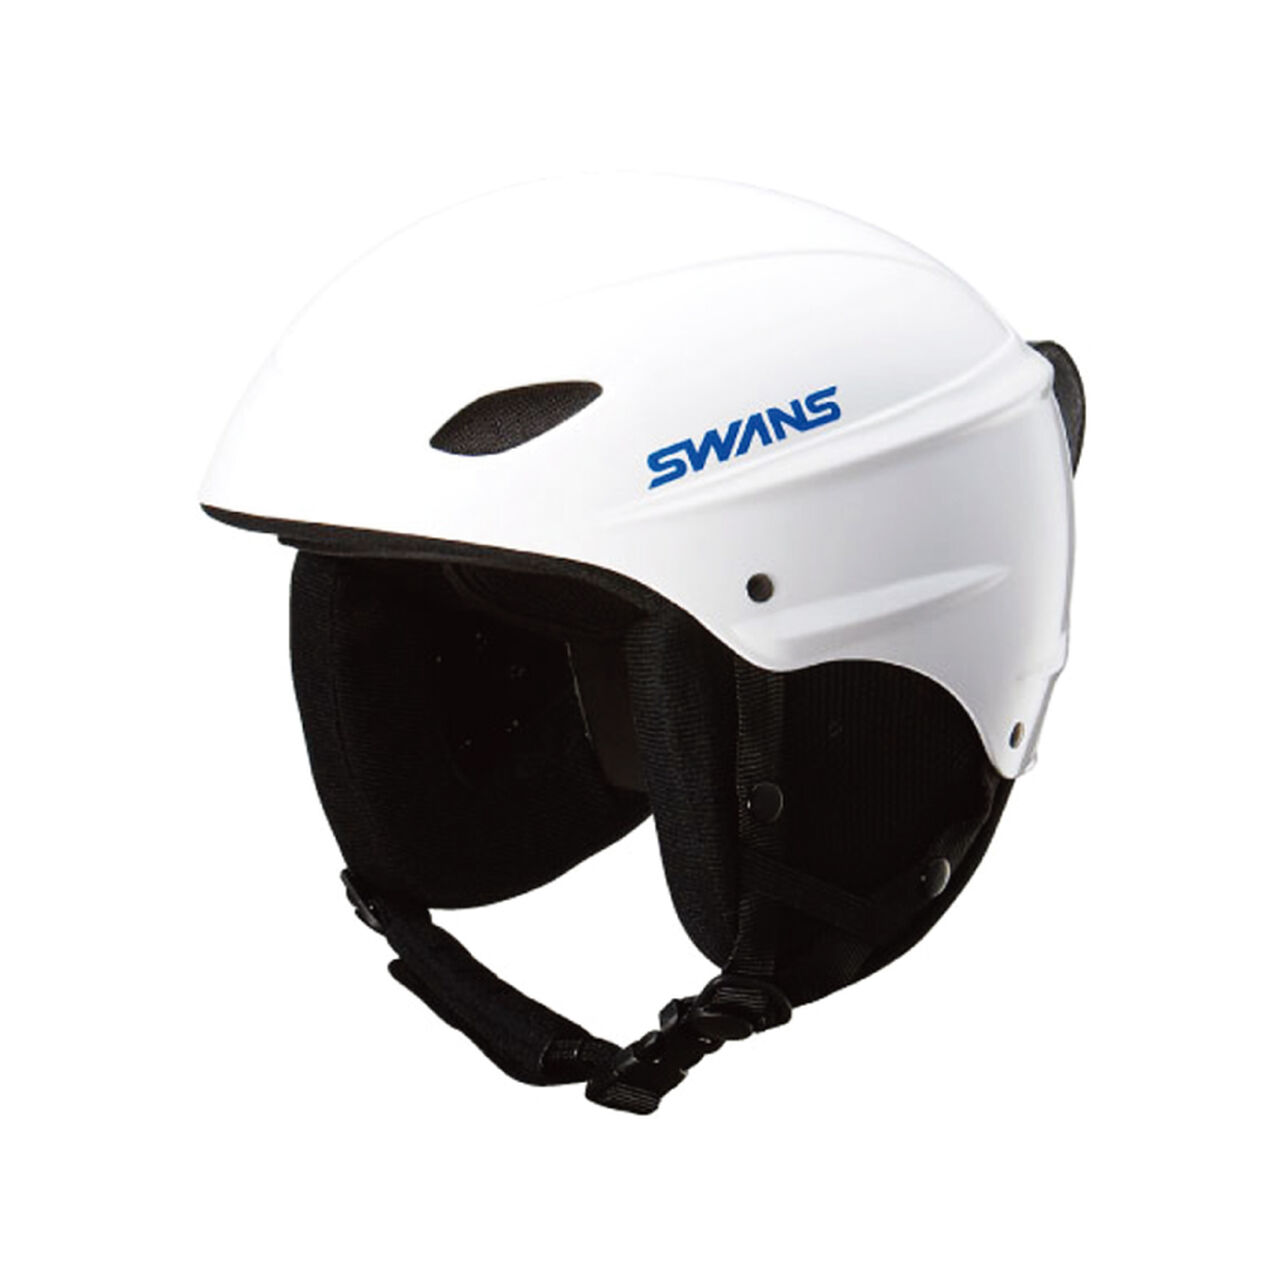 H-451R snow helmet White L size,Opt1, large image number 0